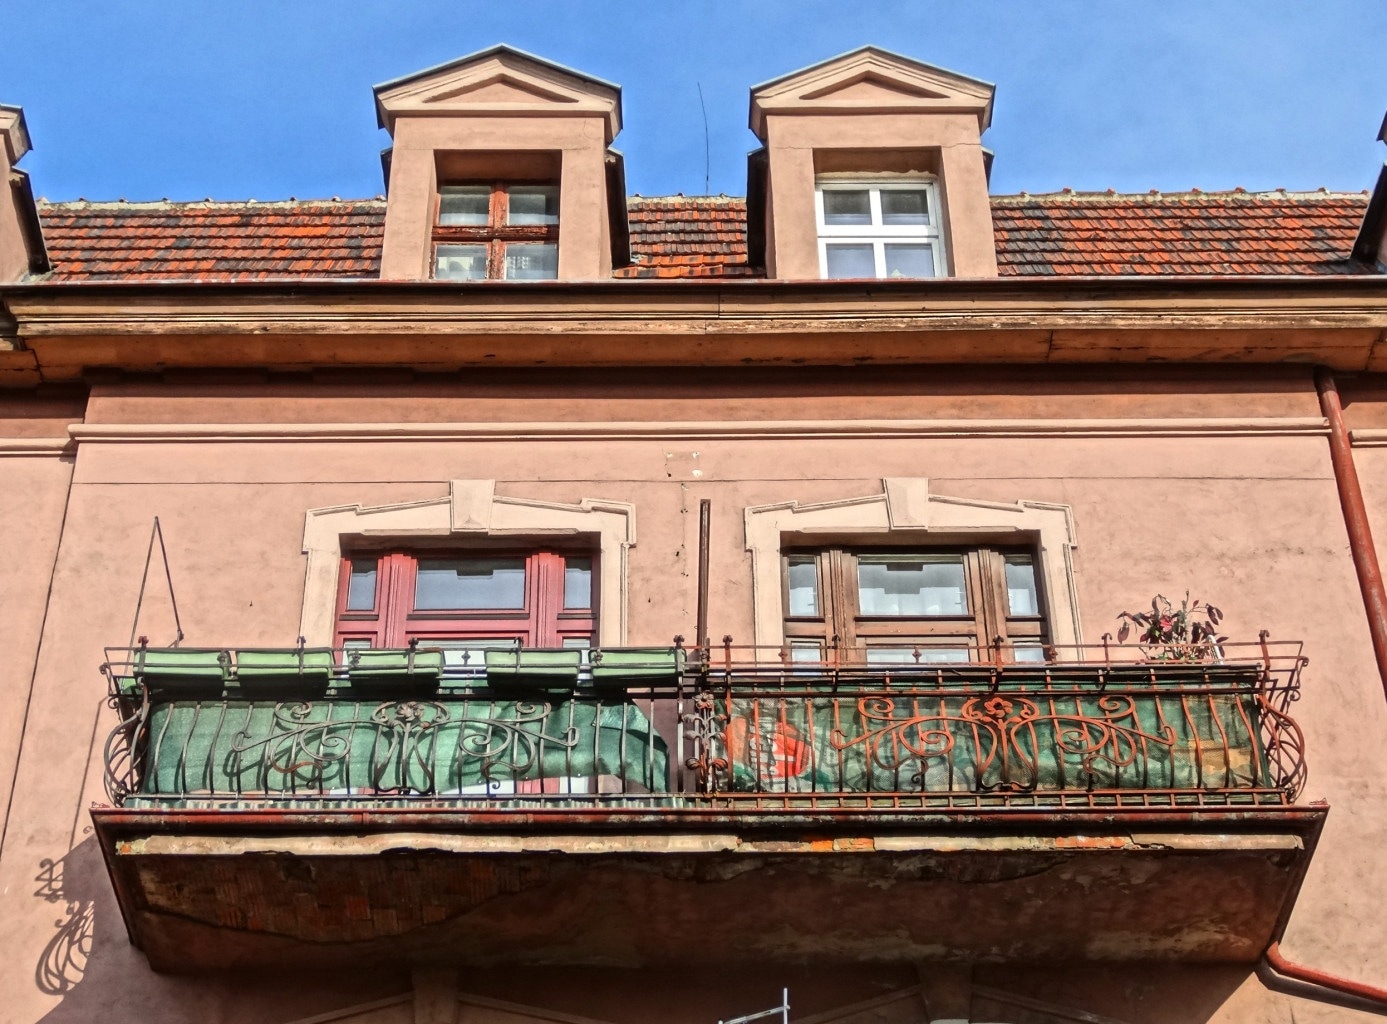 Bydgoszcz, Balcony, House, Architecture, building exterior, architecture